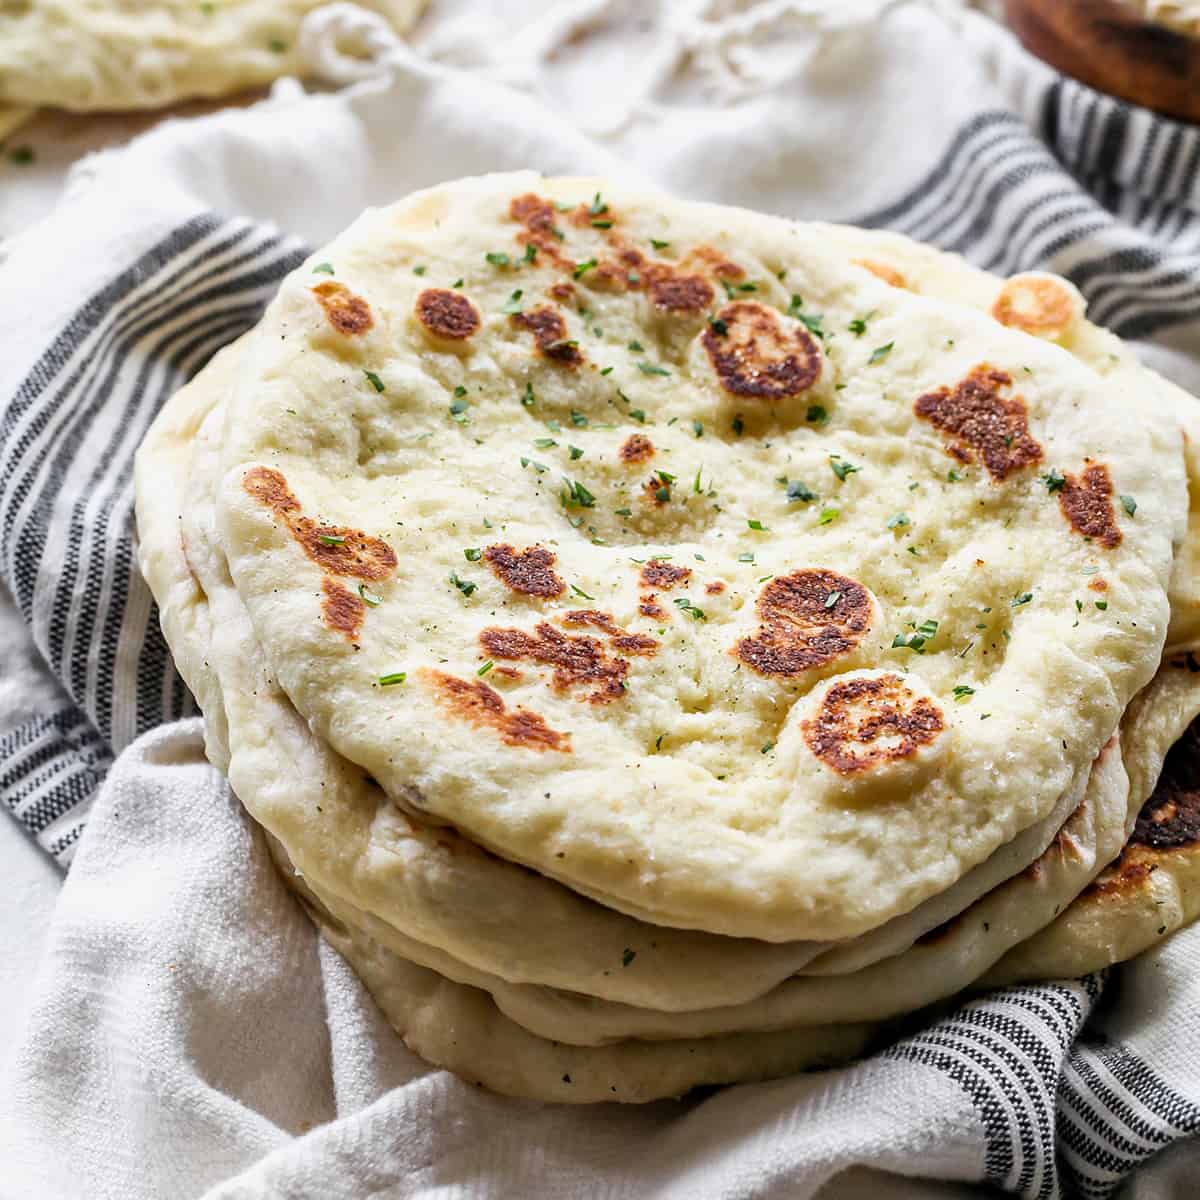 https://joyfoodsunshine.com/wp-content/uploads/2021/07/homemade-naan-bread-recipe-1.jpg